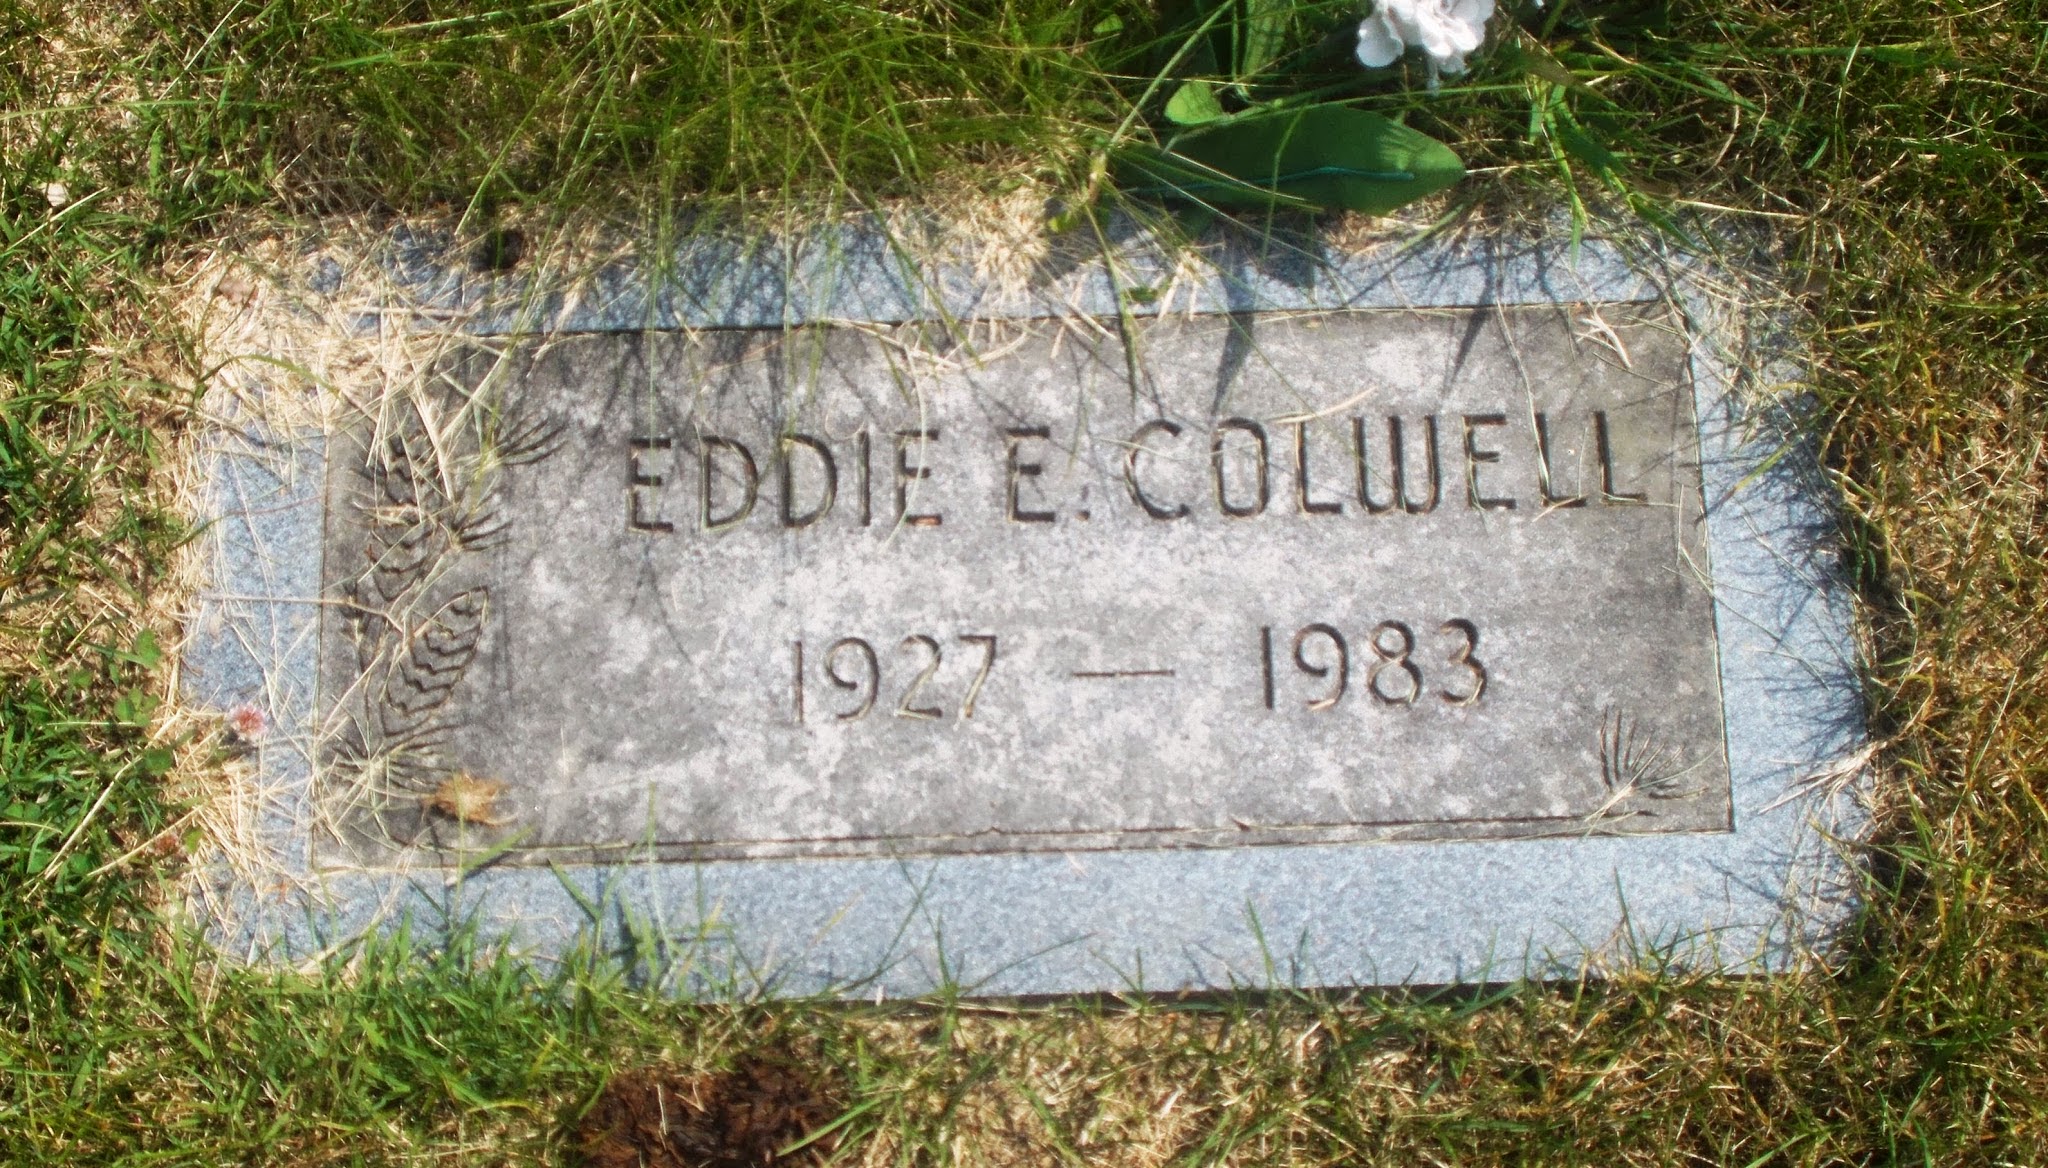 Eddie E Colwell